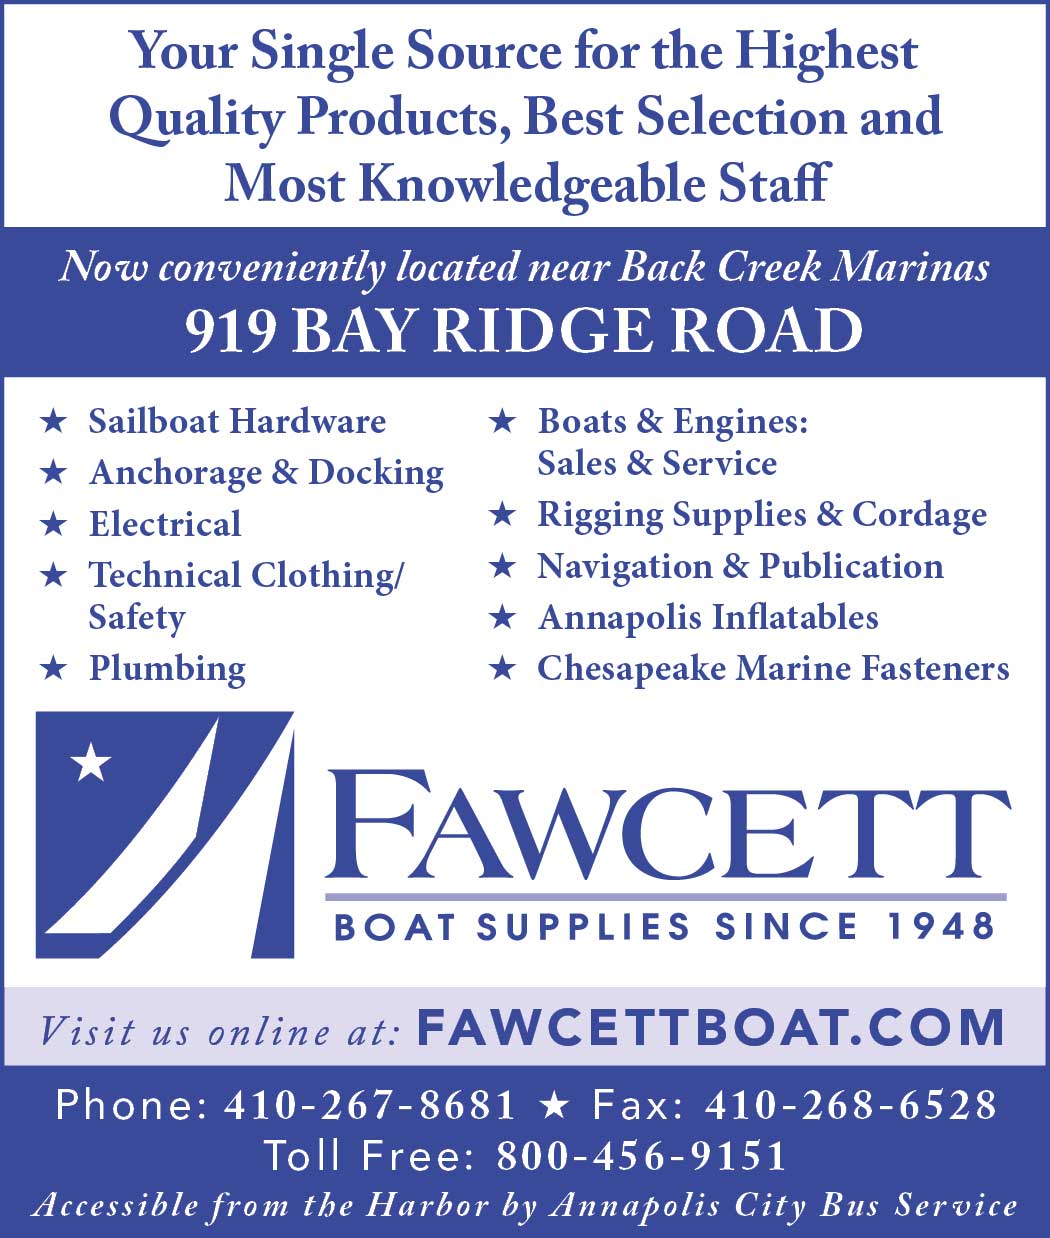 Fawcett Boat Supplies, LLC